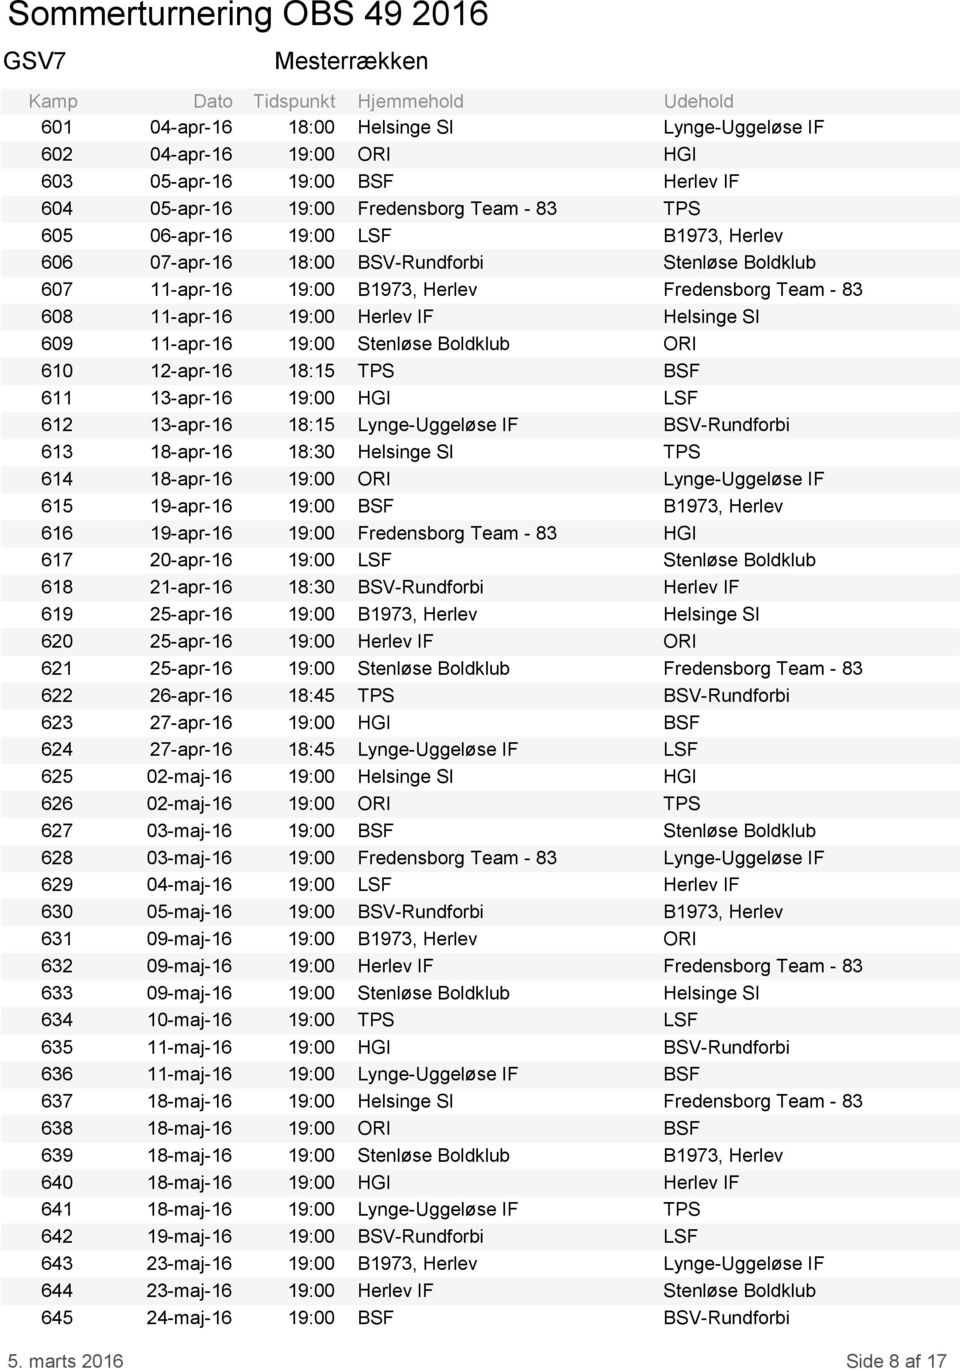 11-apr-16 19:00 Stenløse Boldklub ORI 610 12-apr-16 18:15 TPS BSF 611 13-apr-16 19:00 HGI LSF 612 13-apr-16 18:15 Lynge-Uggeløse IF BSV-Rundforbi 613 18-apr-16 18:30 Helsinge SI TPS 614 18-apr-16